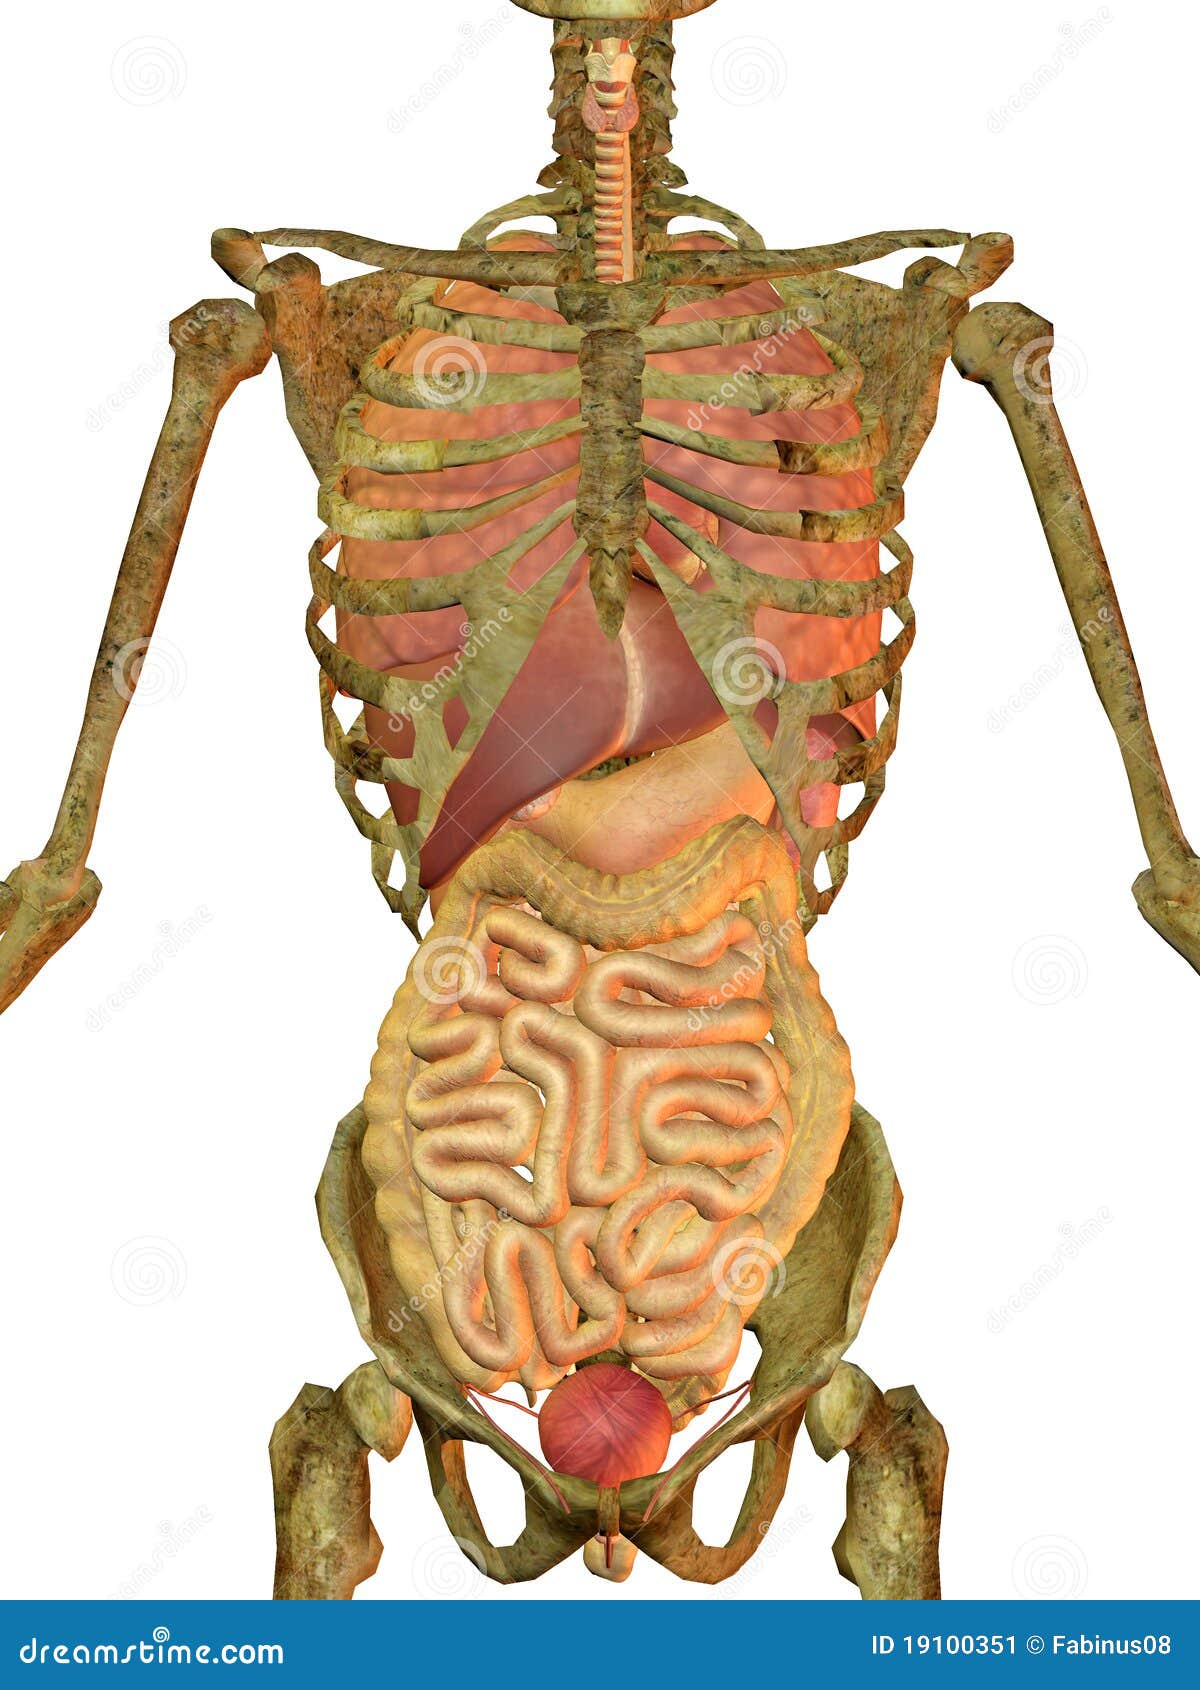 Human skeleton and organs stock illustration. Illustration of coloured